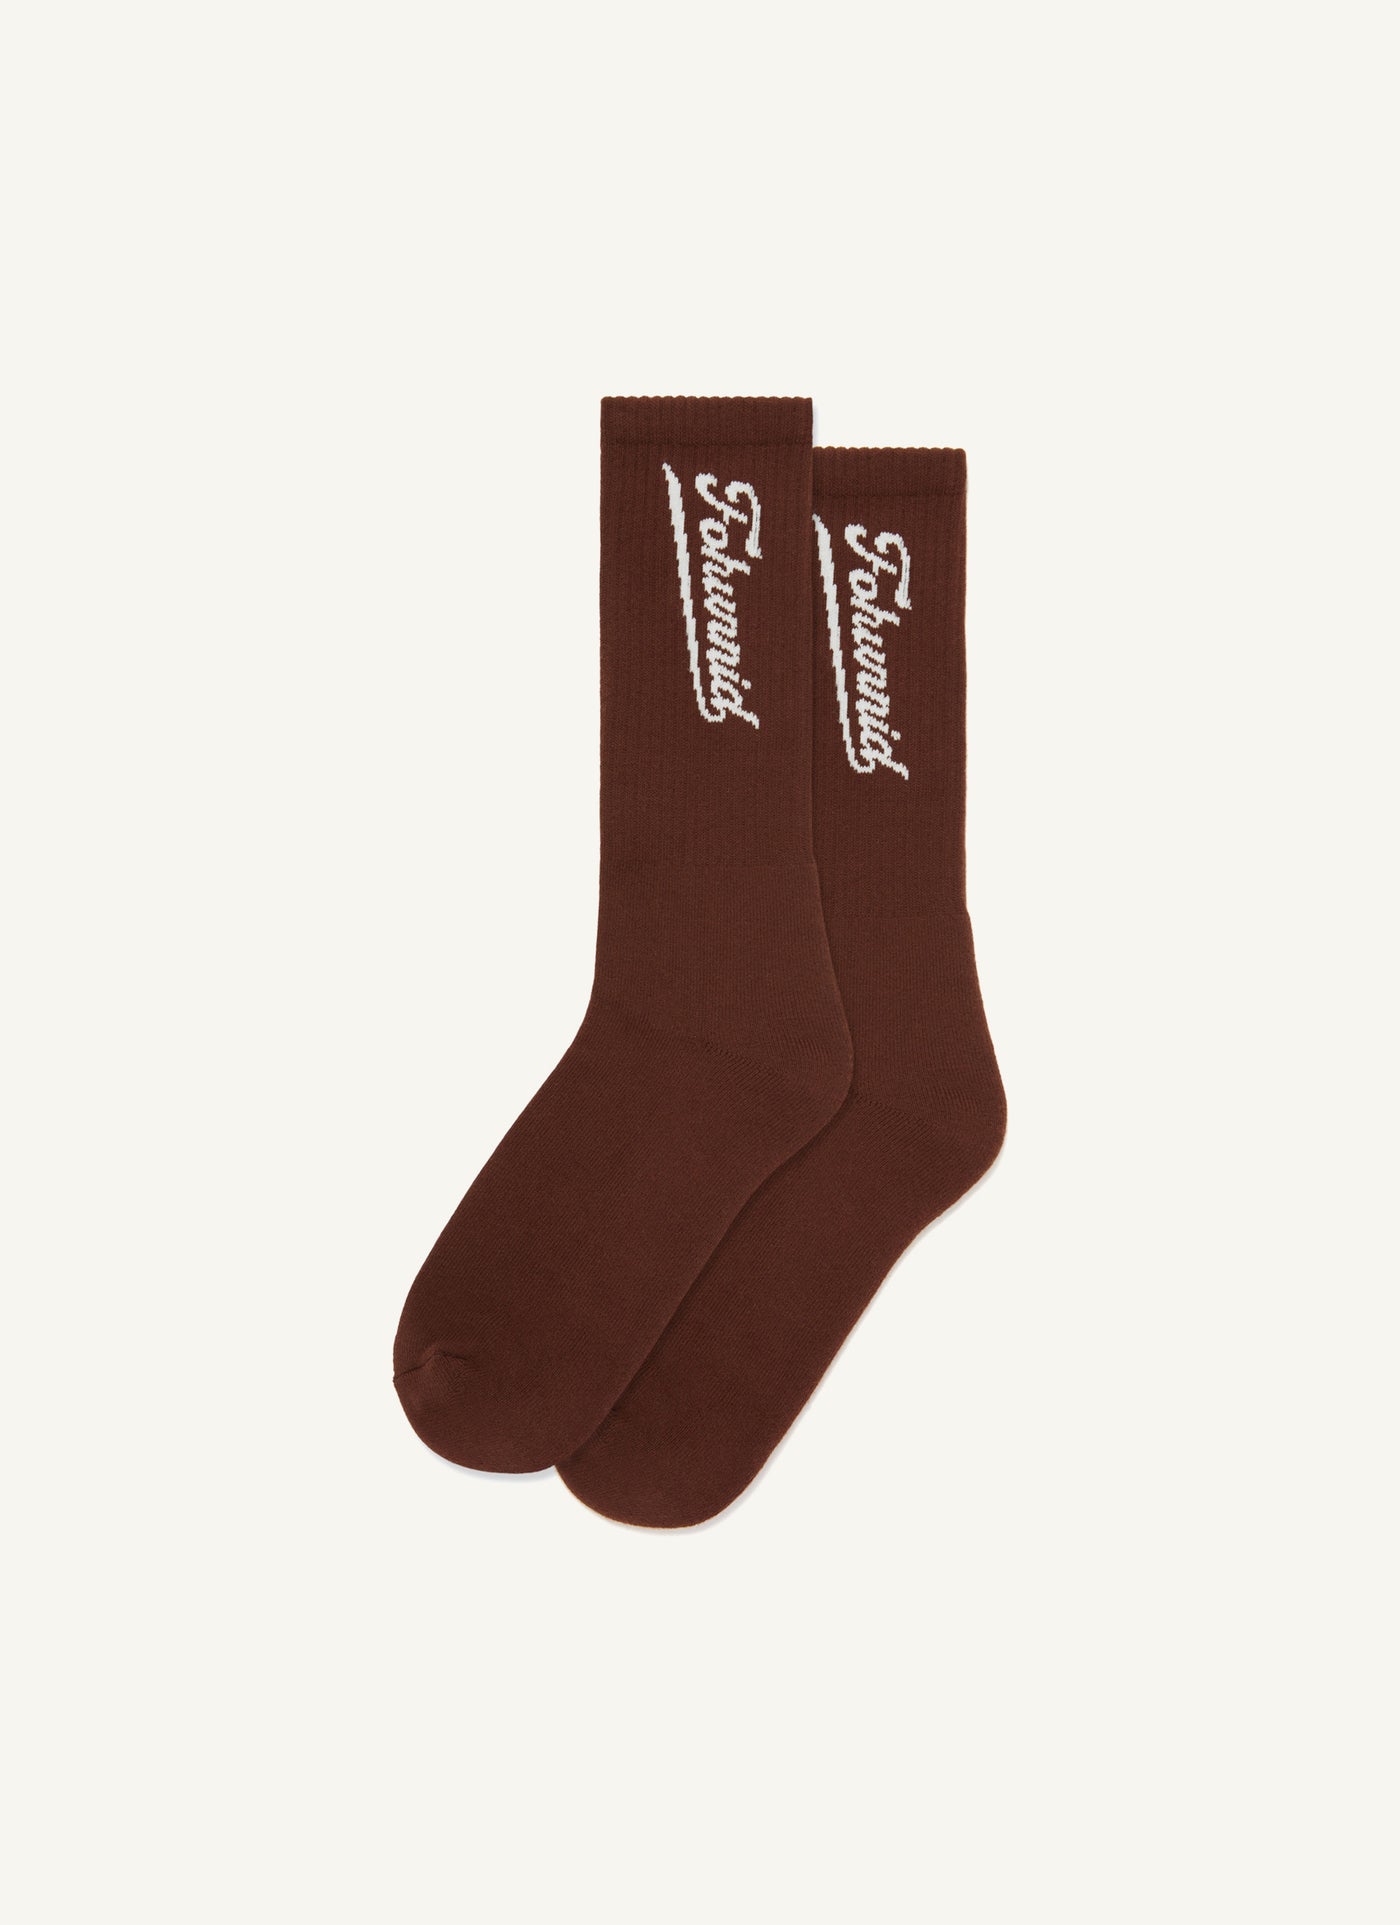 Fohunnid Socks (Brown)